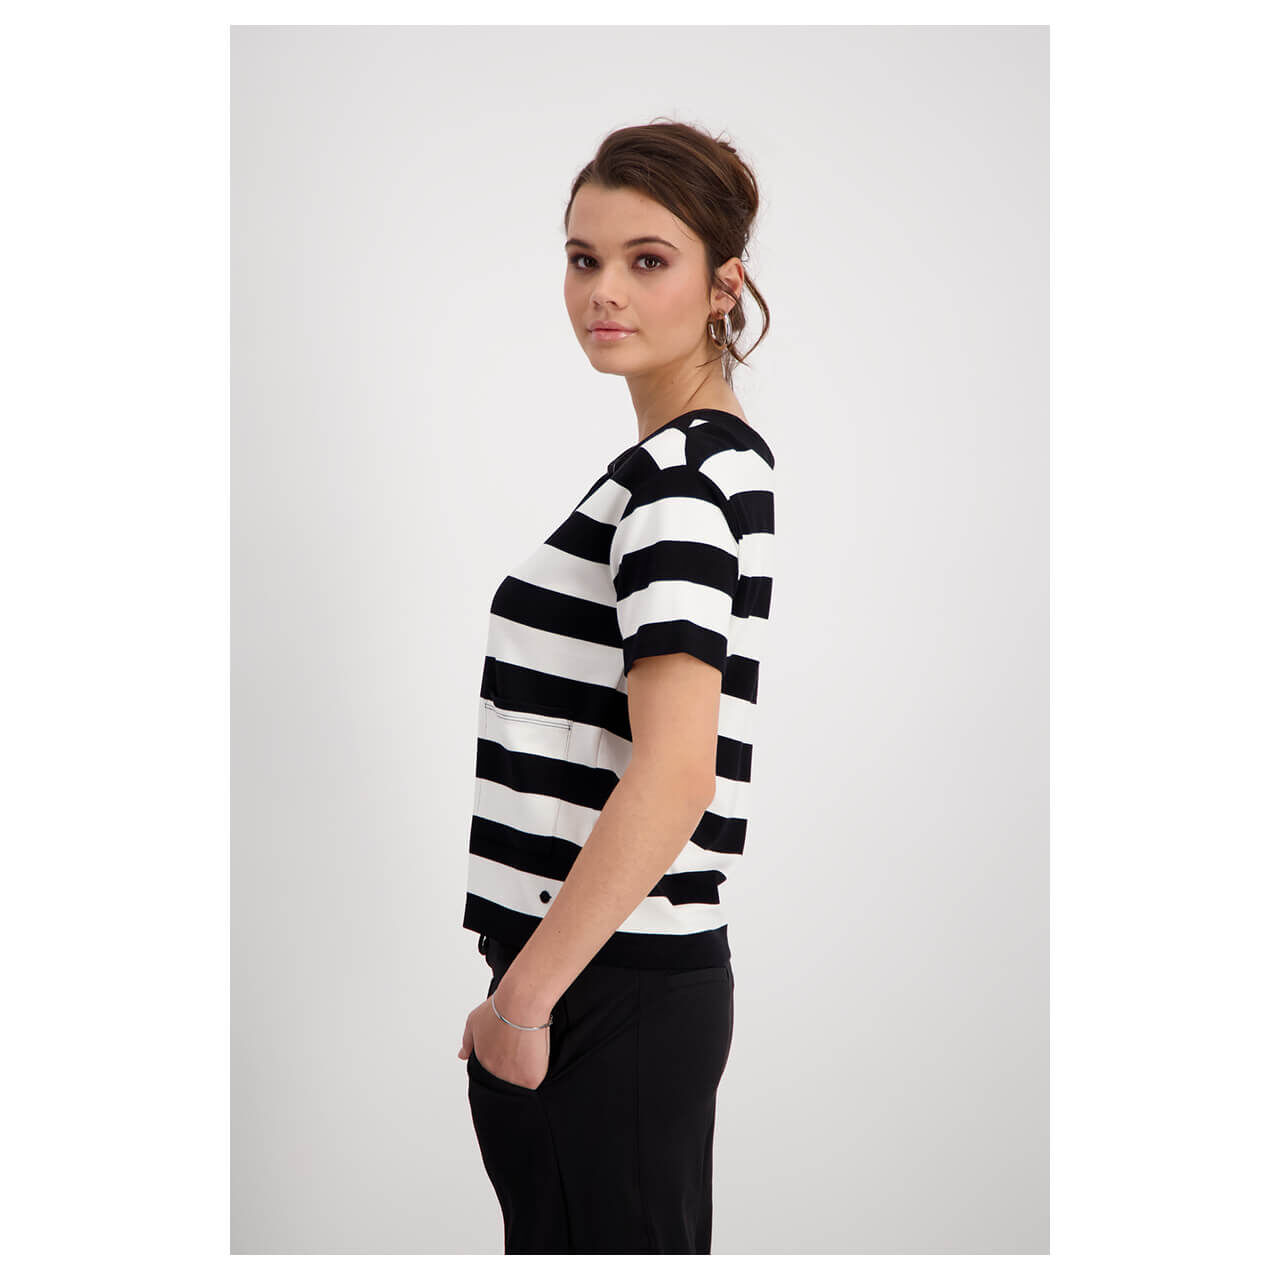 Monari Damen Kurzarm Sweatshirt black white stripes